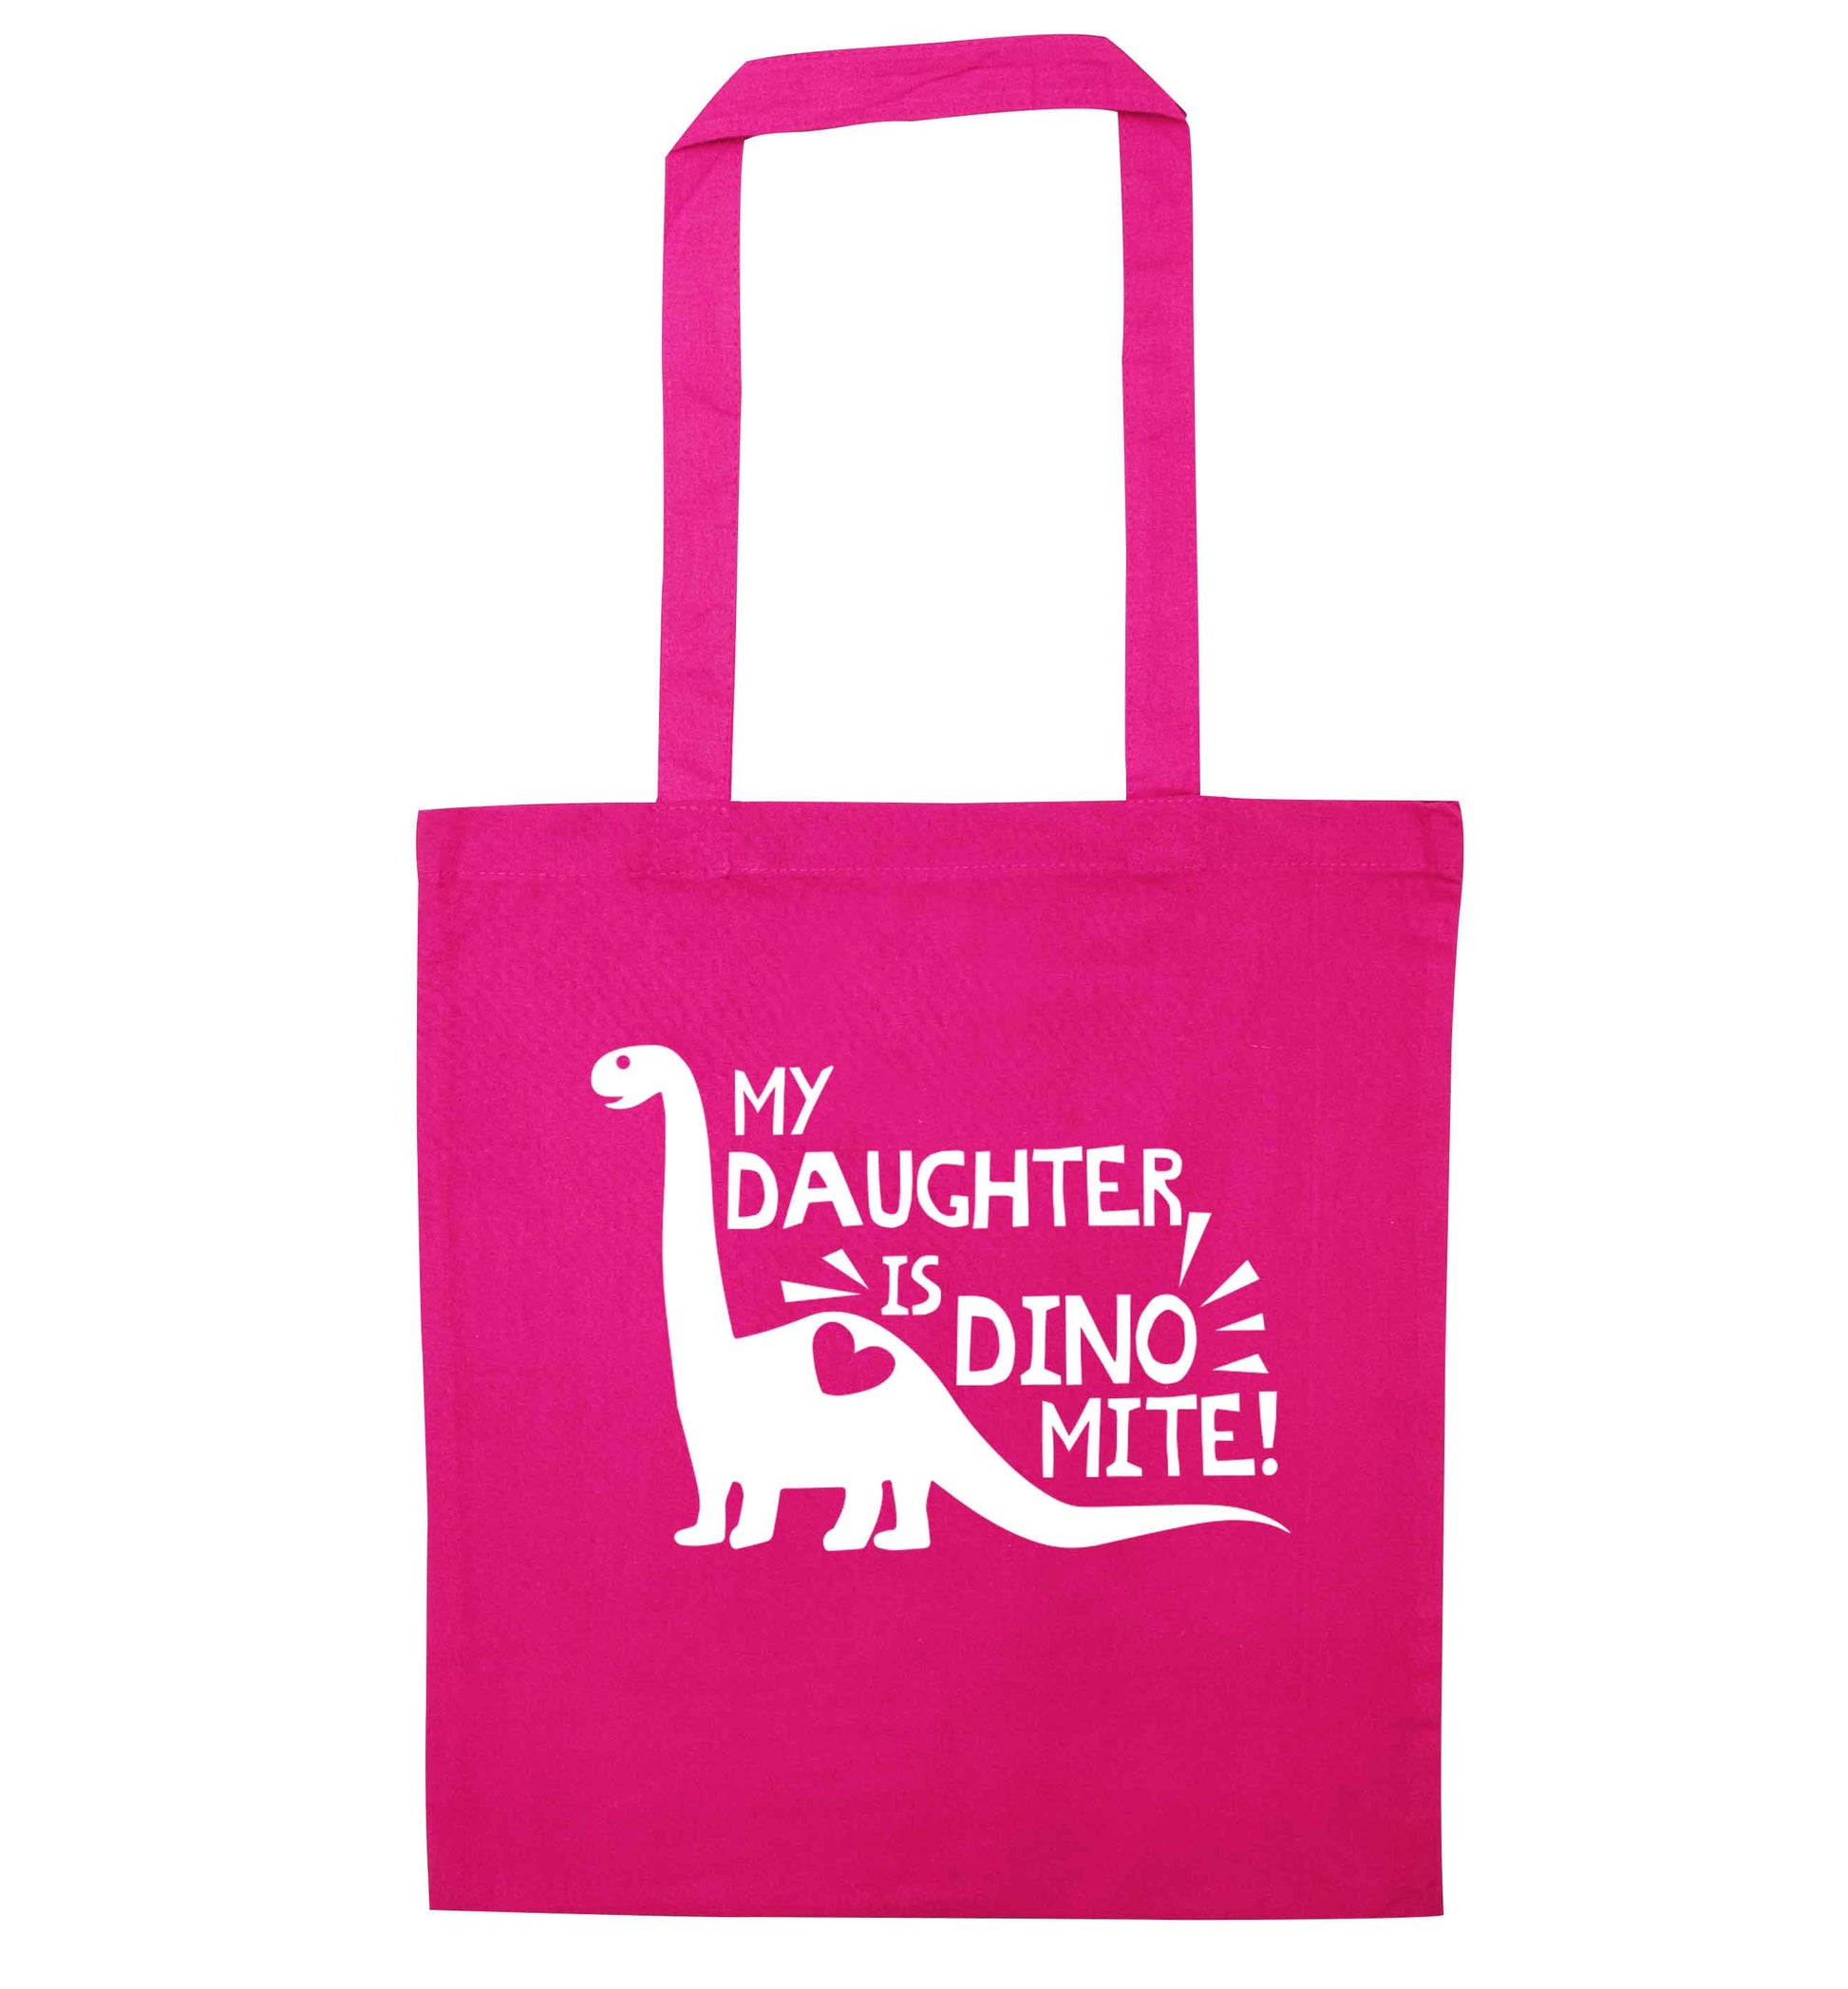 My daughter is dinomite! pink tote bag